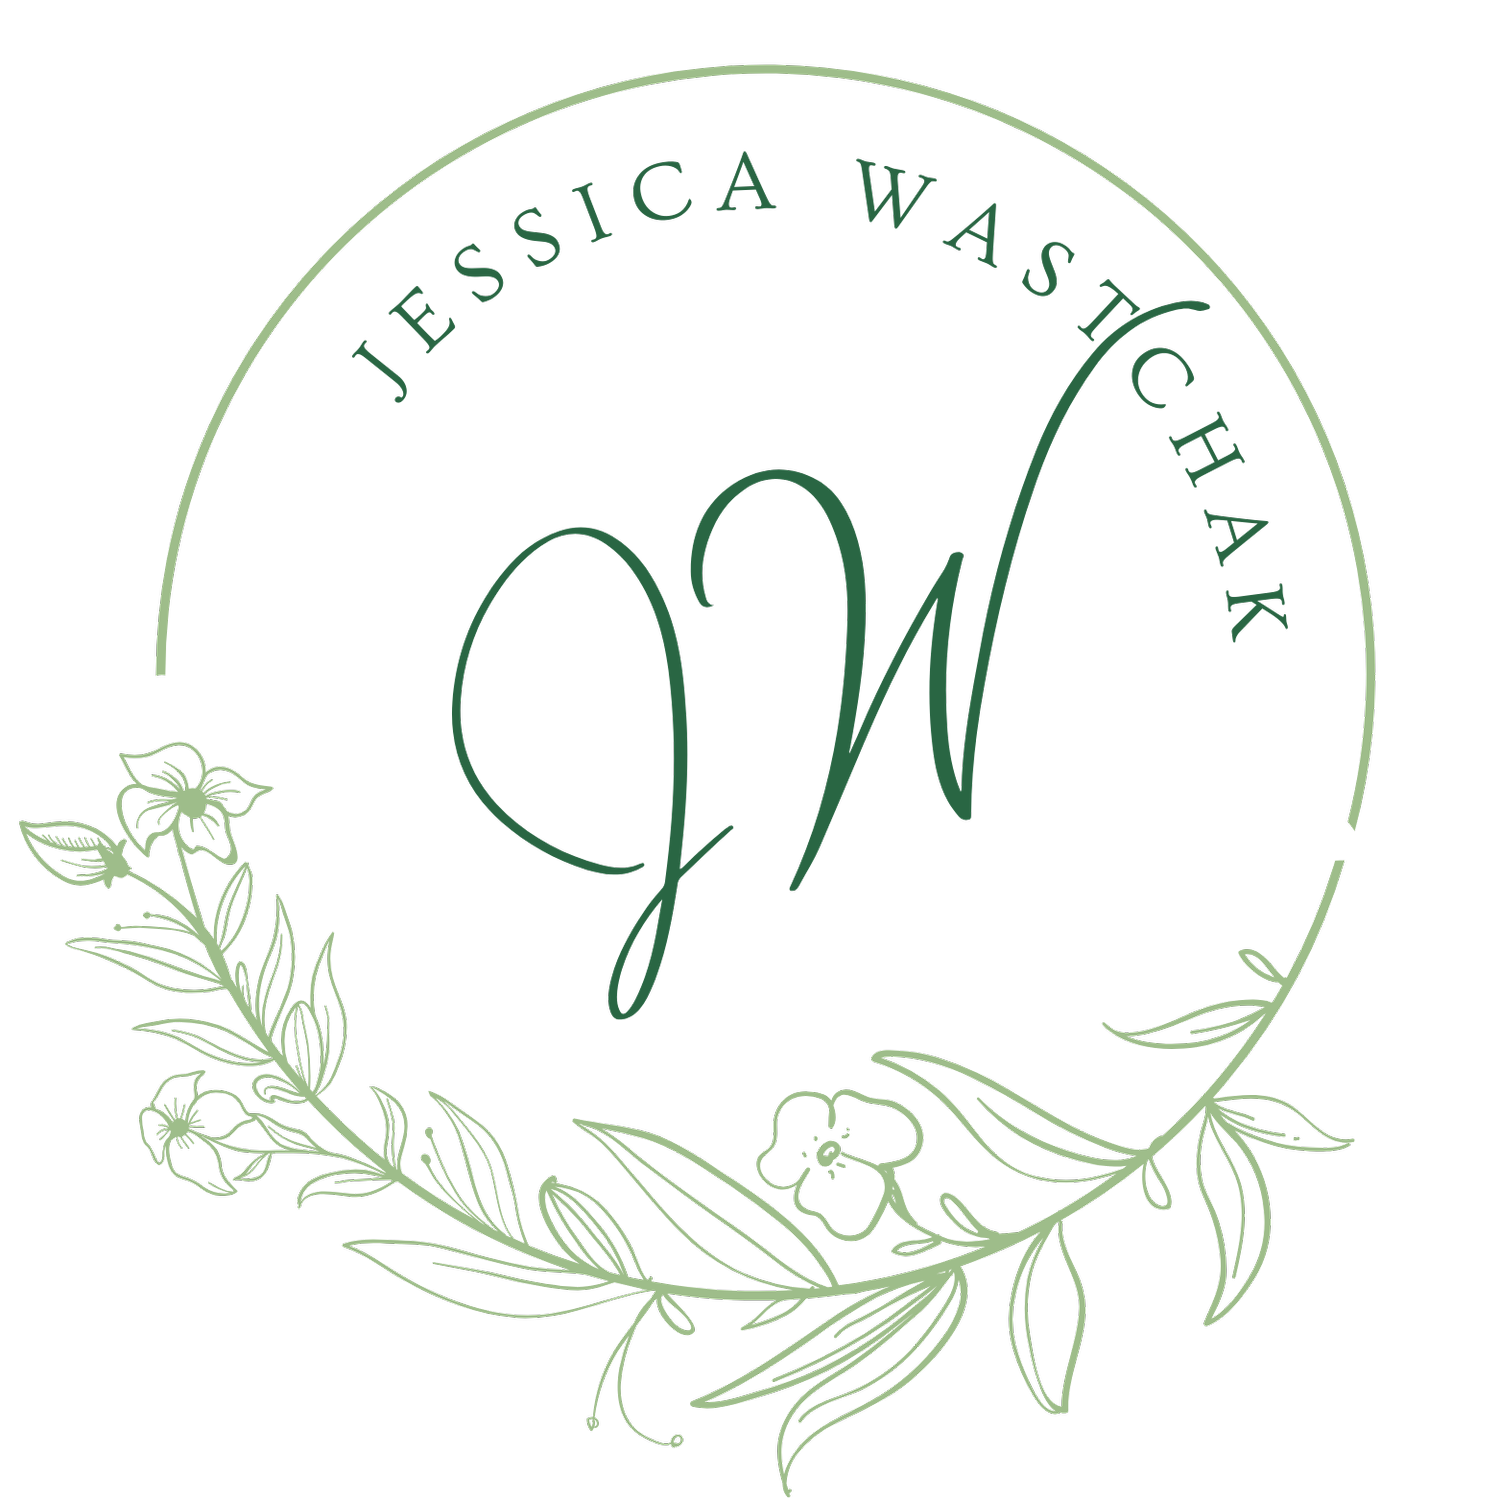 JESSICA WASTCHAK